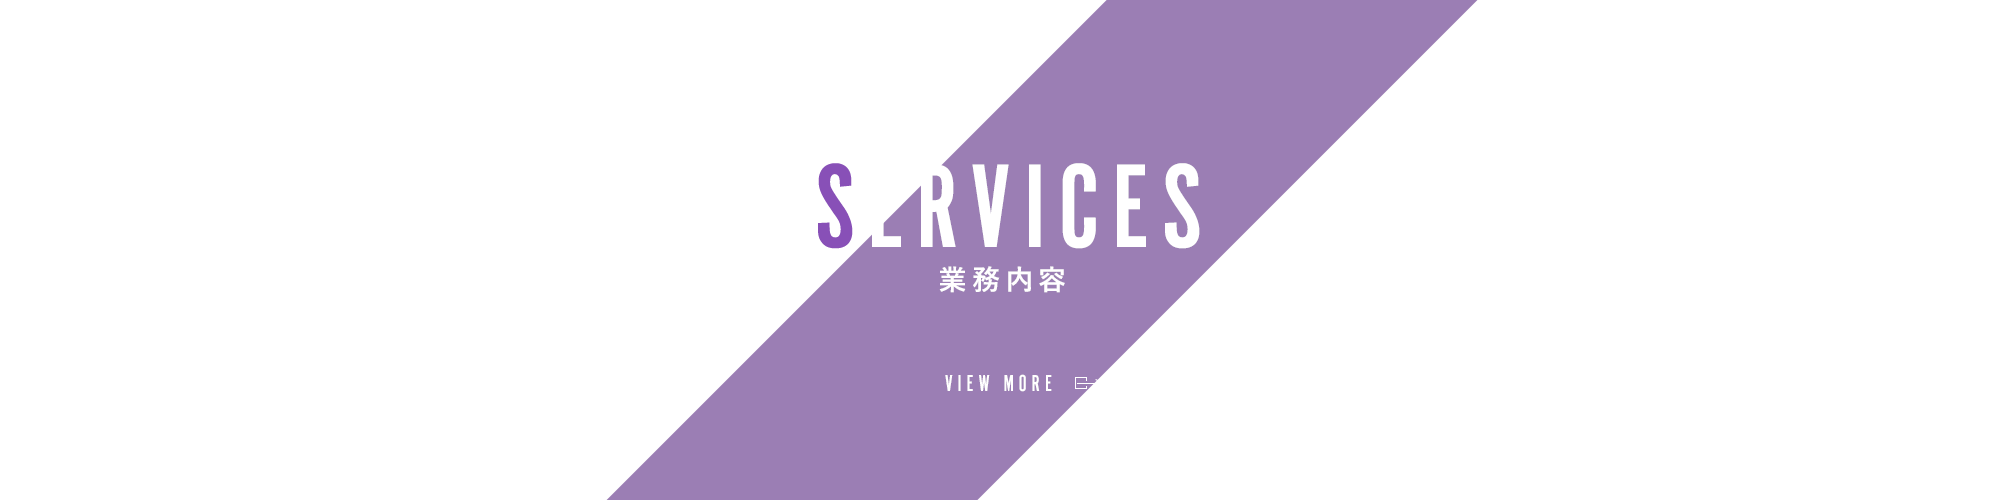 banner_services_txt